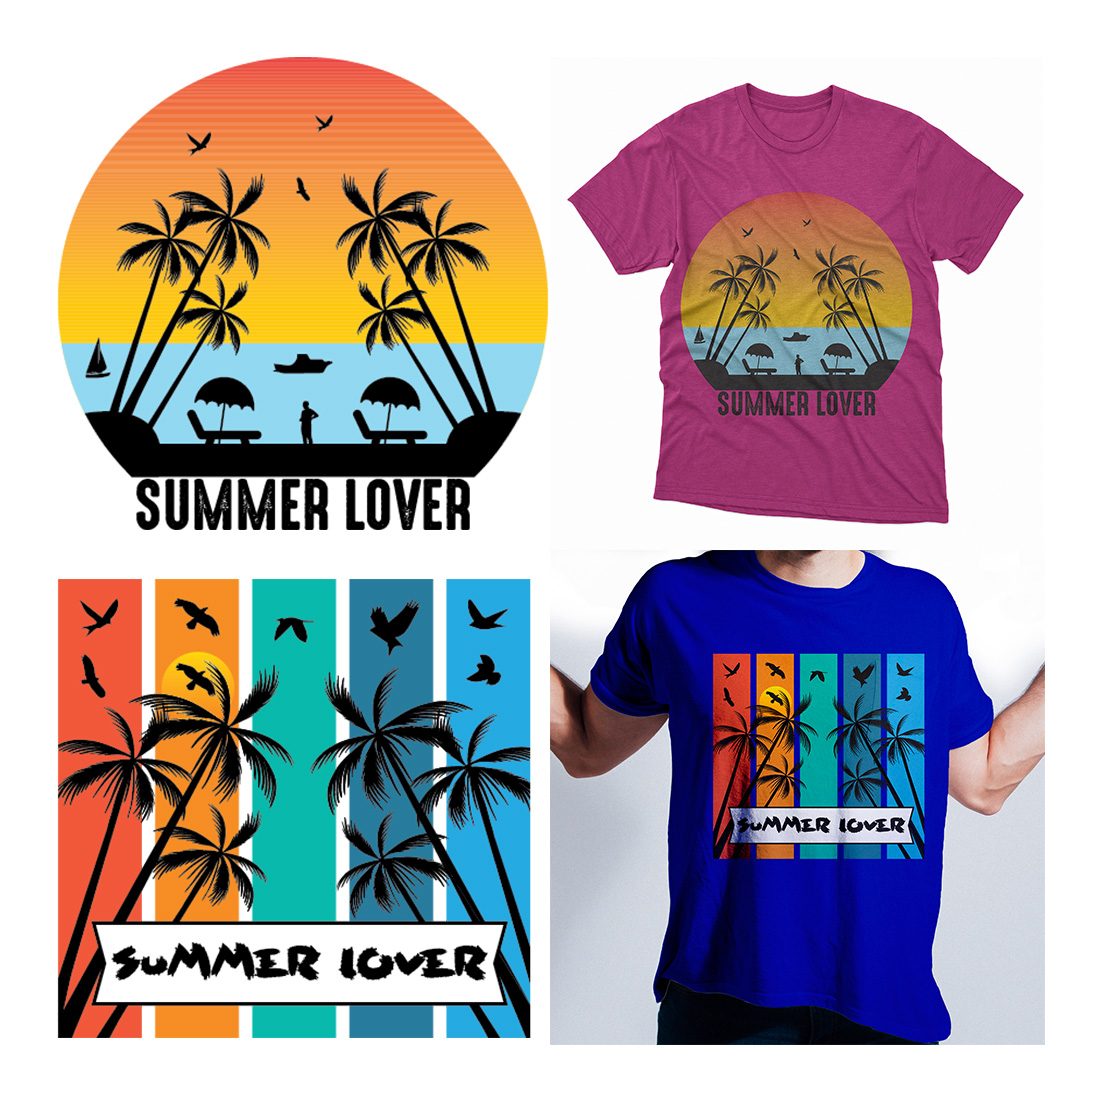 Summer Lover T-Shirt Design cover image.